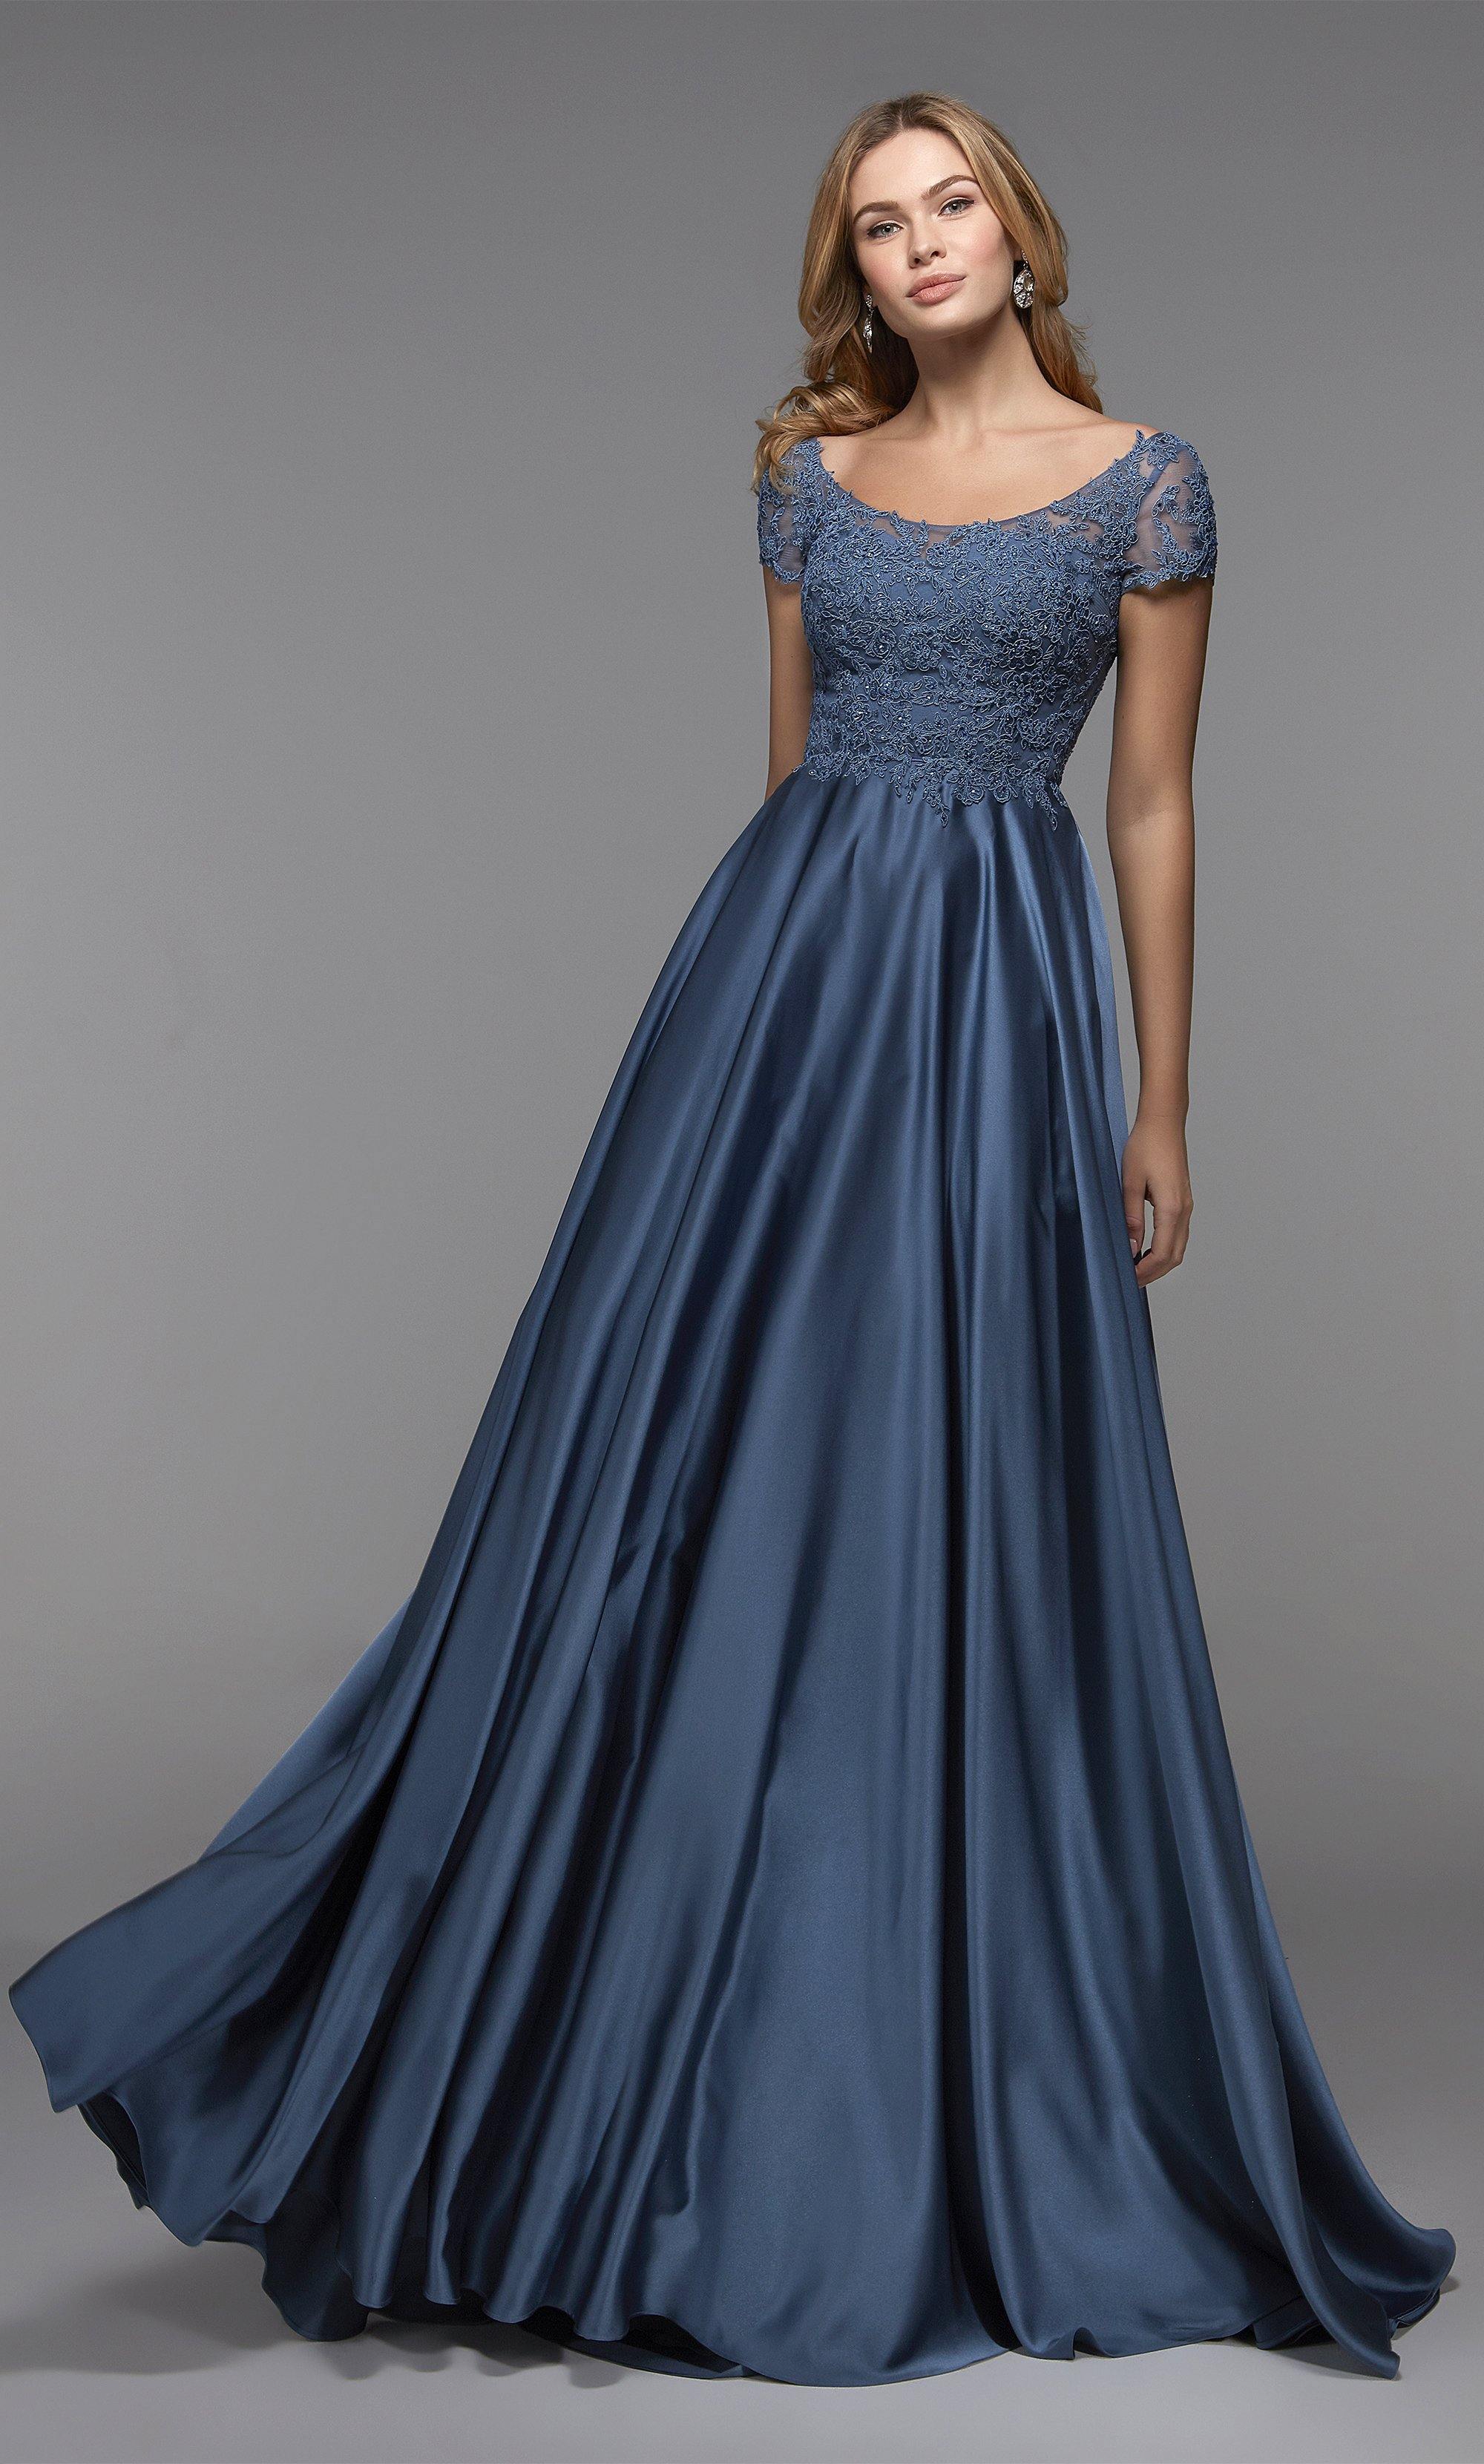 formal dress: 27505. long evening dress, illusion neckline, flowy